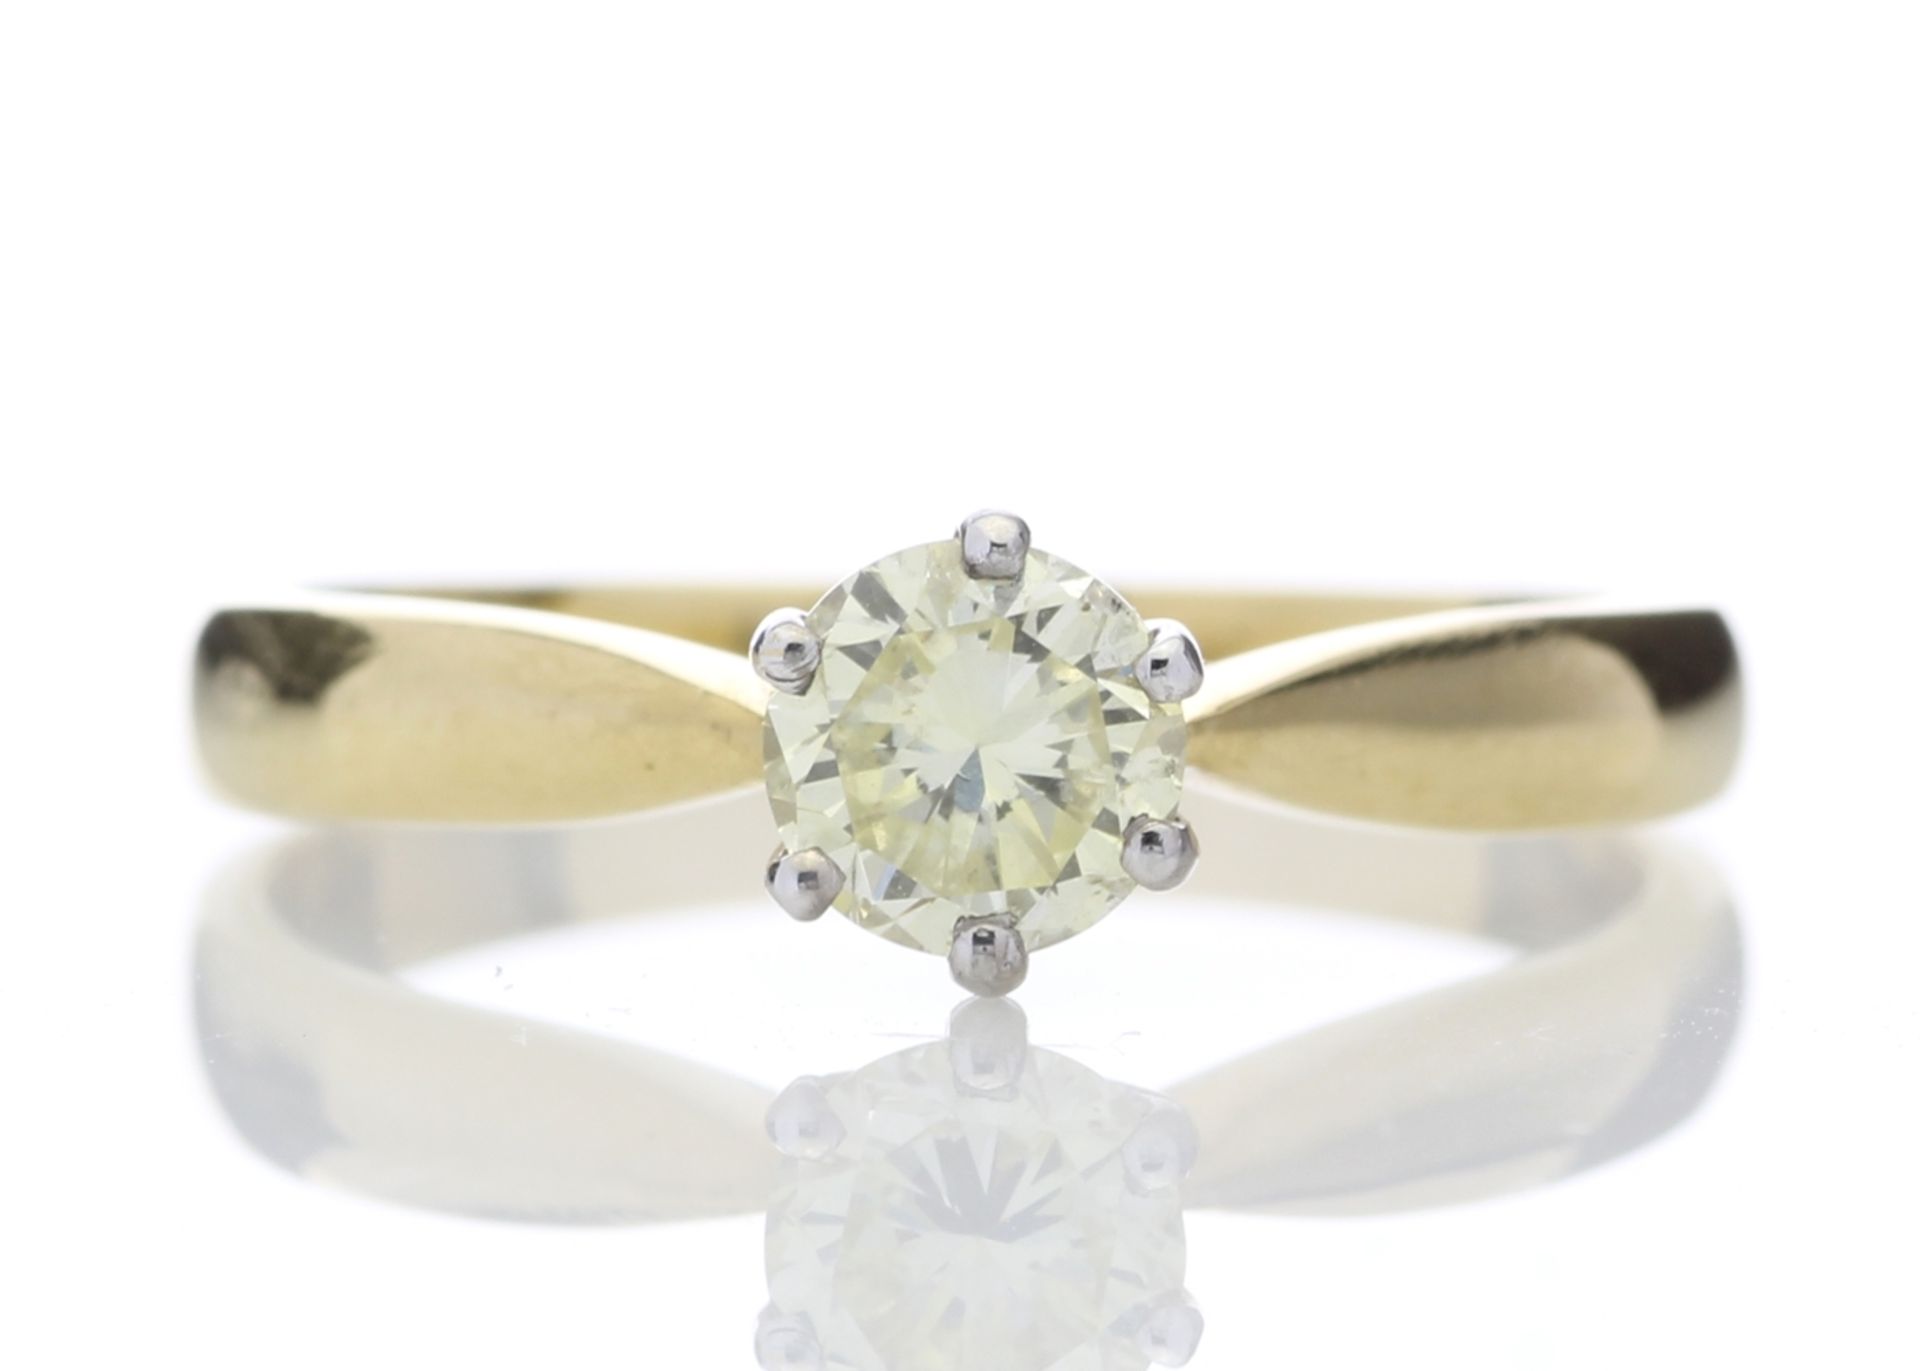 18ct Single Stone Fancy Vivid Yellow Claw Set Diamond Ring 0.56 Carats - Valued by AGI £2,461.00 - A